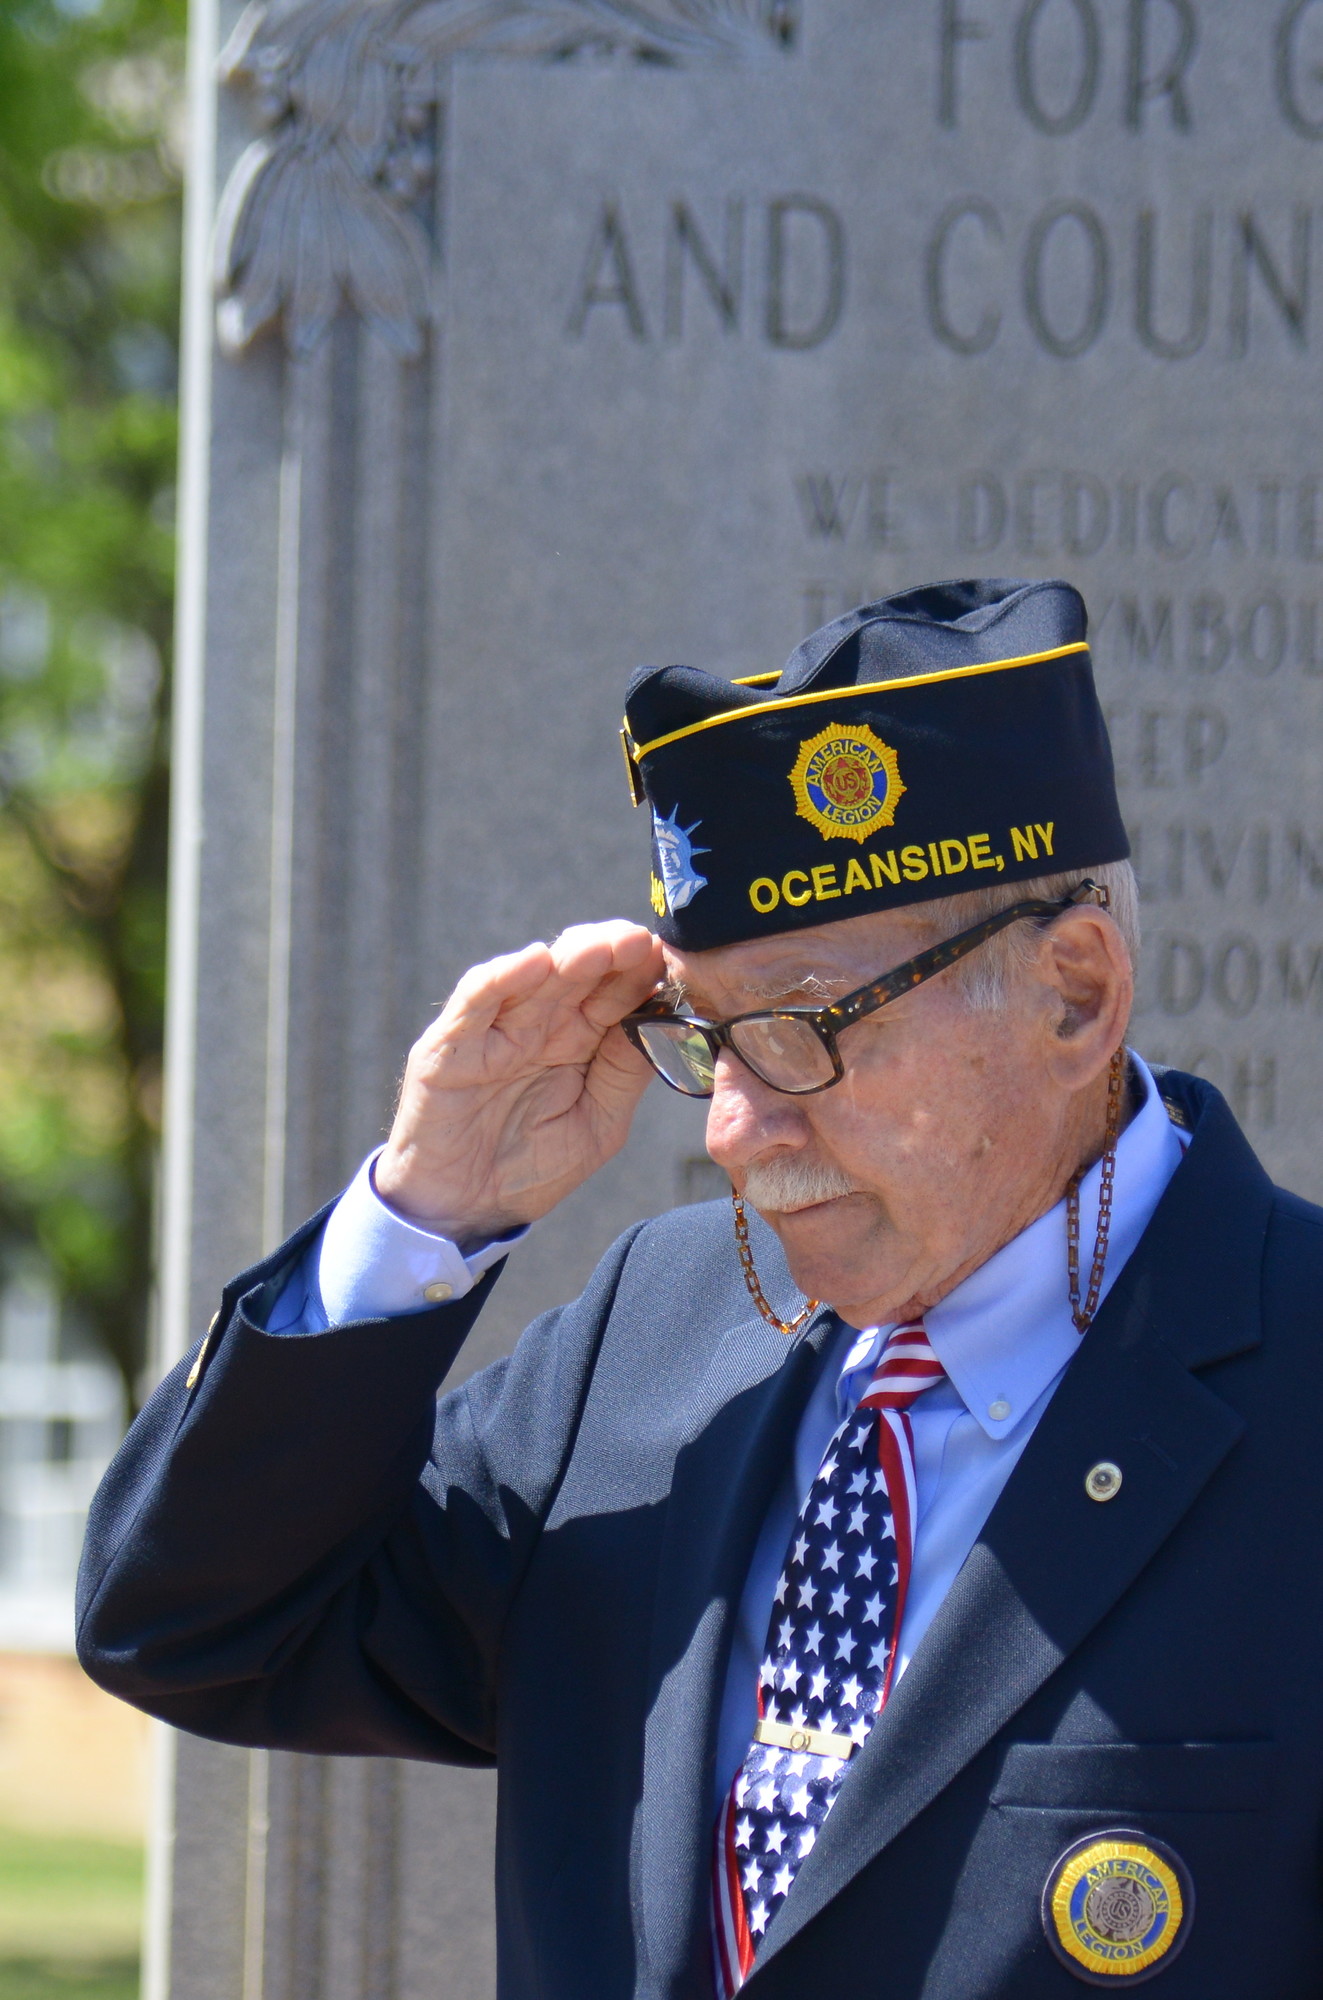 Master of Ceremonies Bill Davison, Commander American Legion Post 1246, salutes at the Memorial Day services held at Oceanside High School.